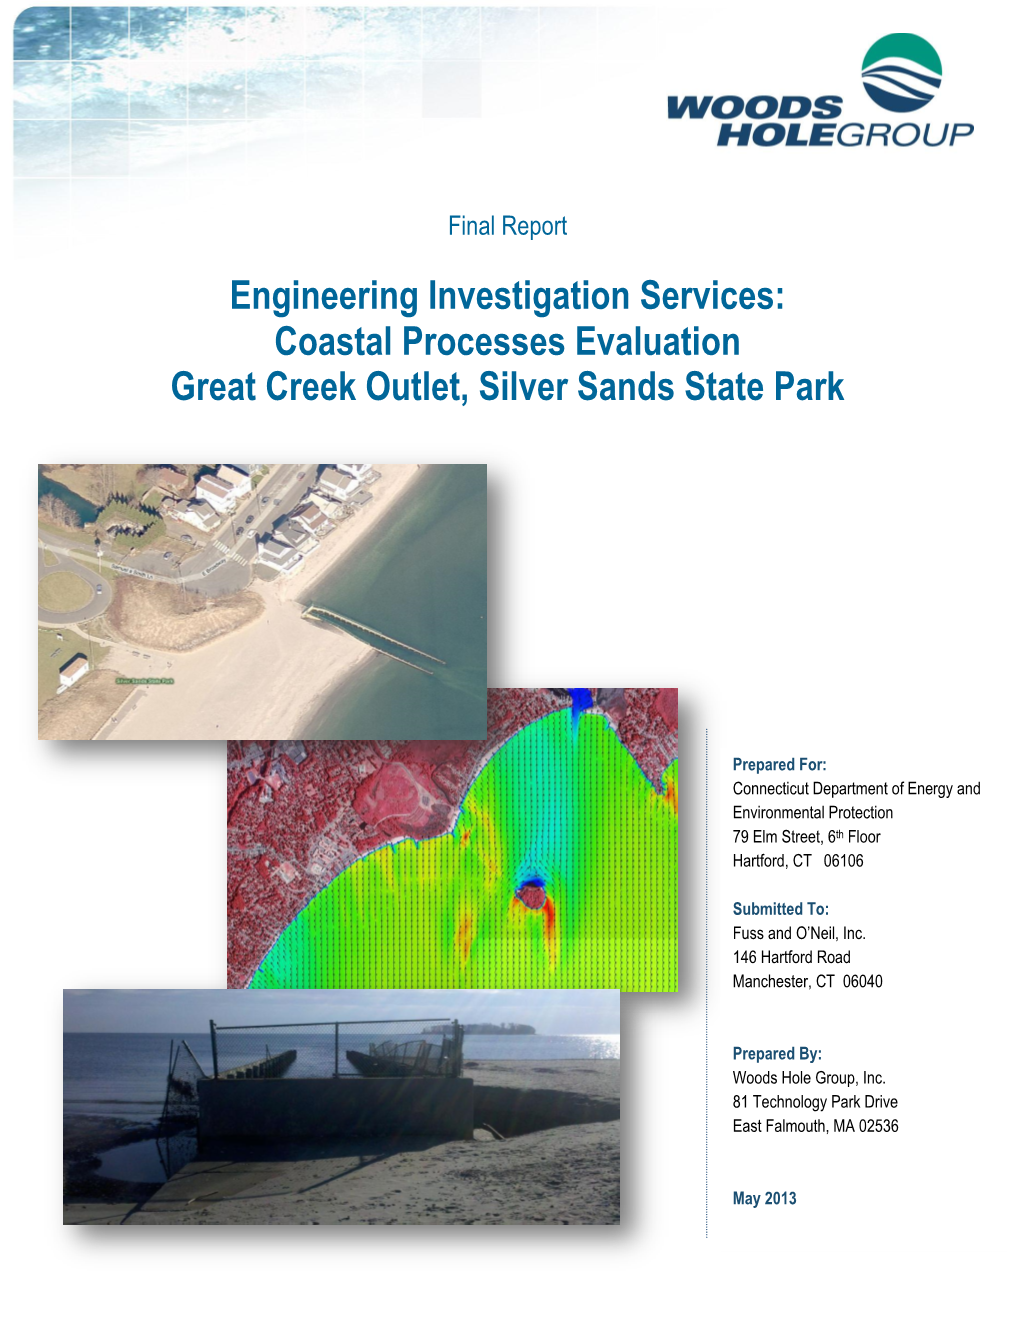 Coastal Processes Evaluation Great Creek Outlet, Silver Sands State Park